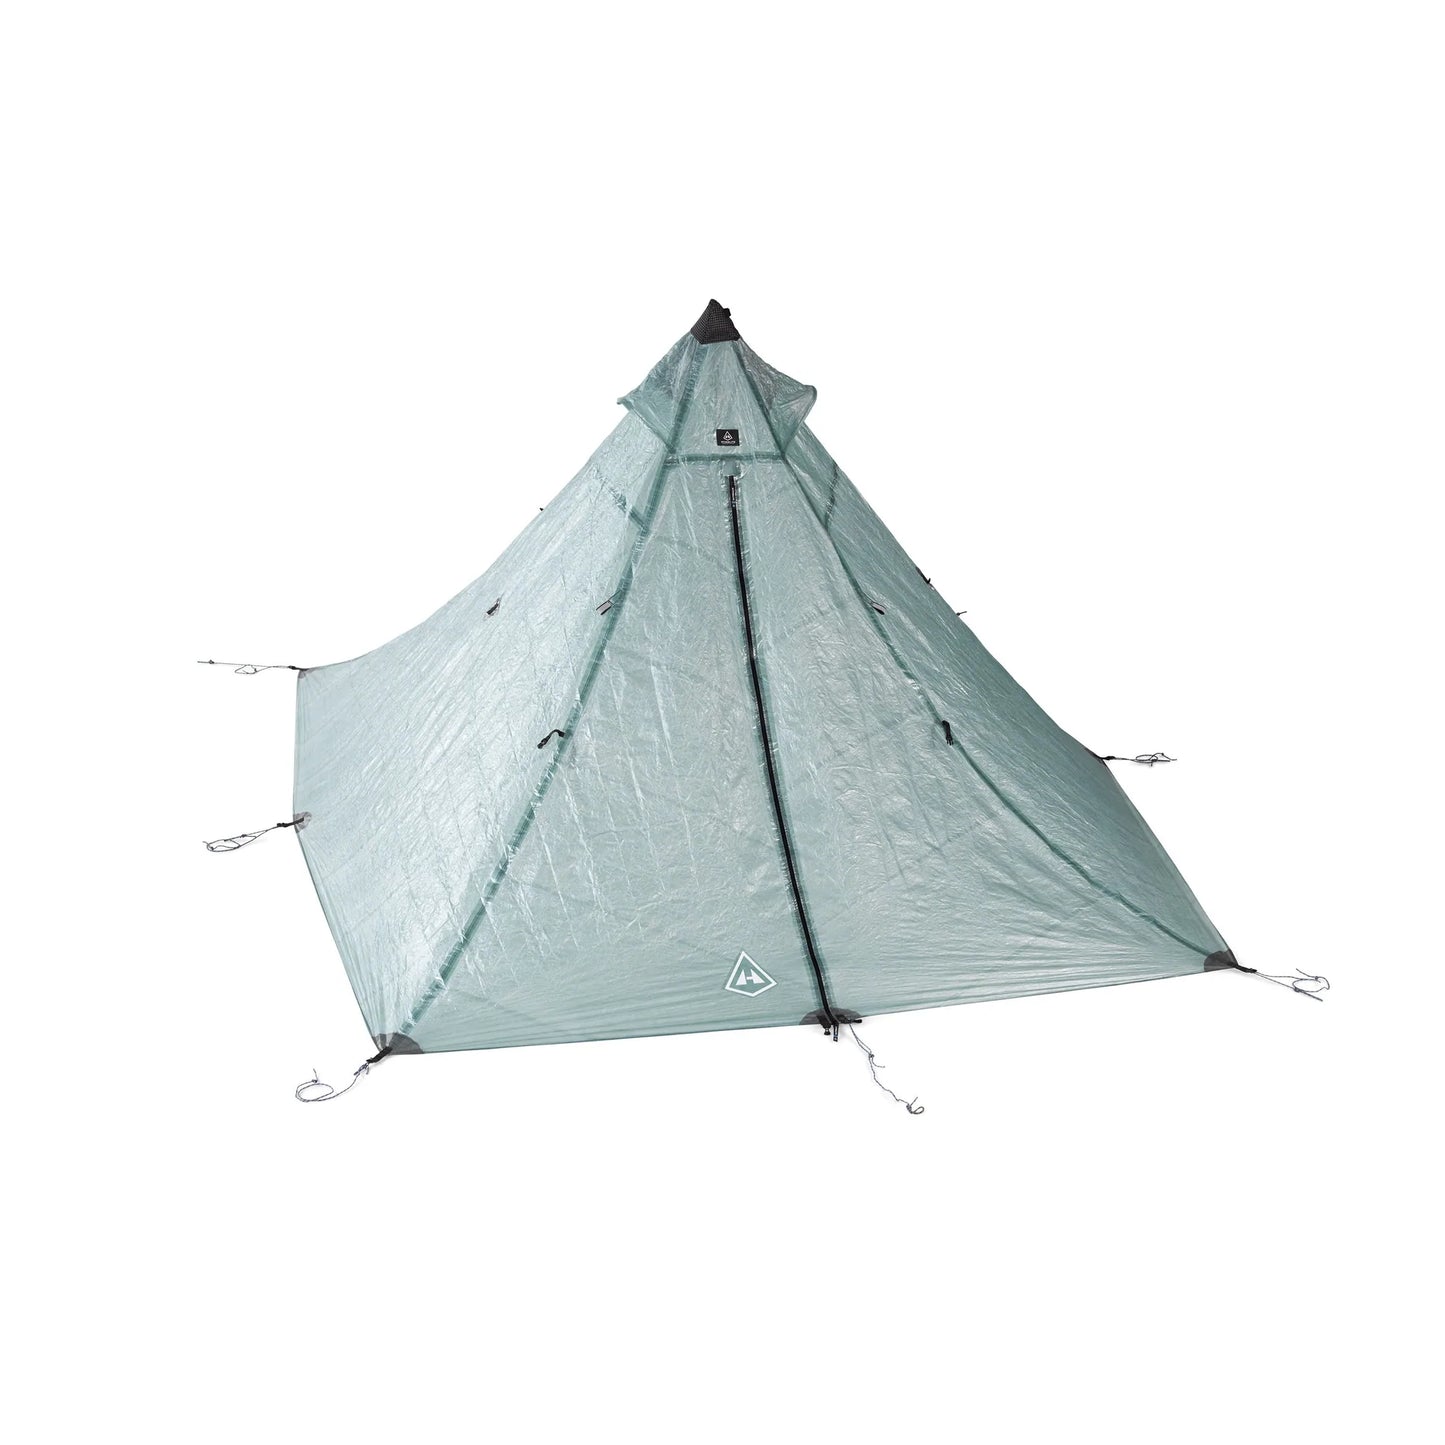 Hyperlite Mountain Gear - Ultamid 2 - Ultralight 2 Person Pyramid Tent